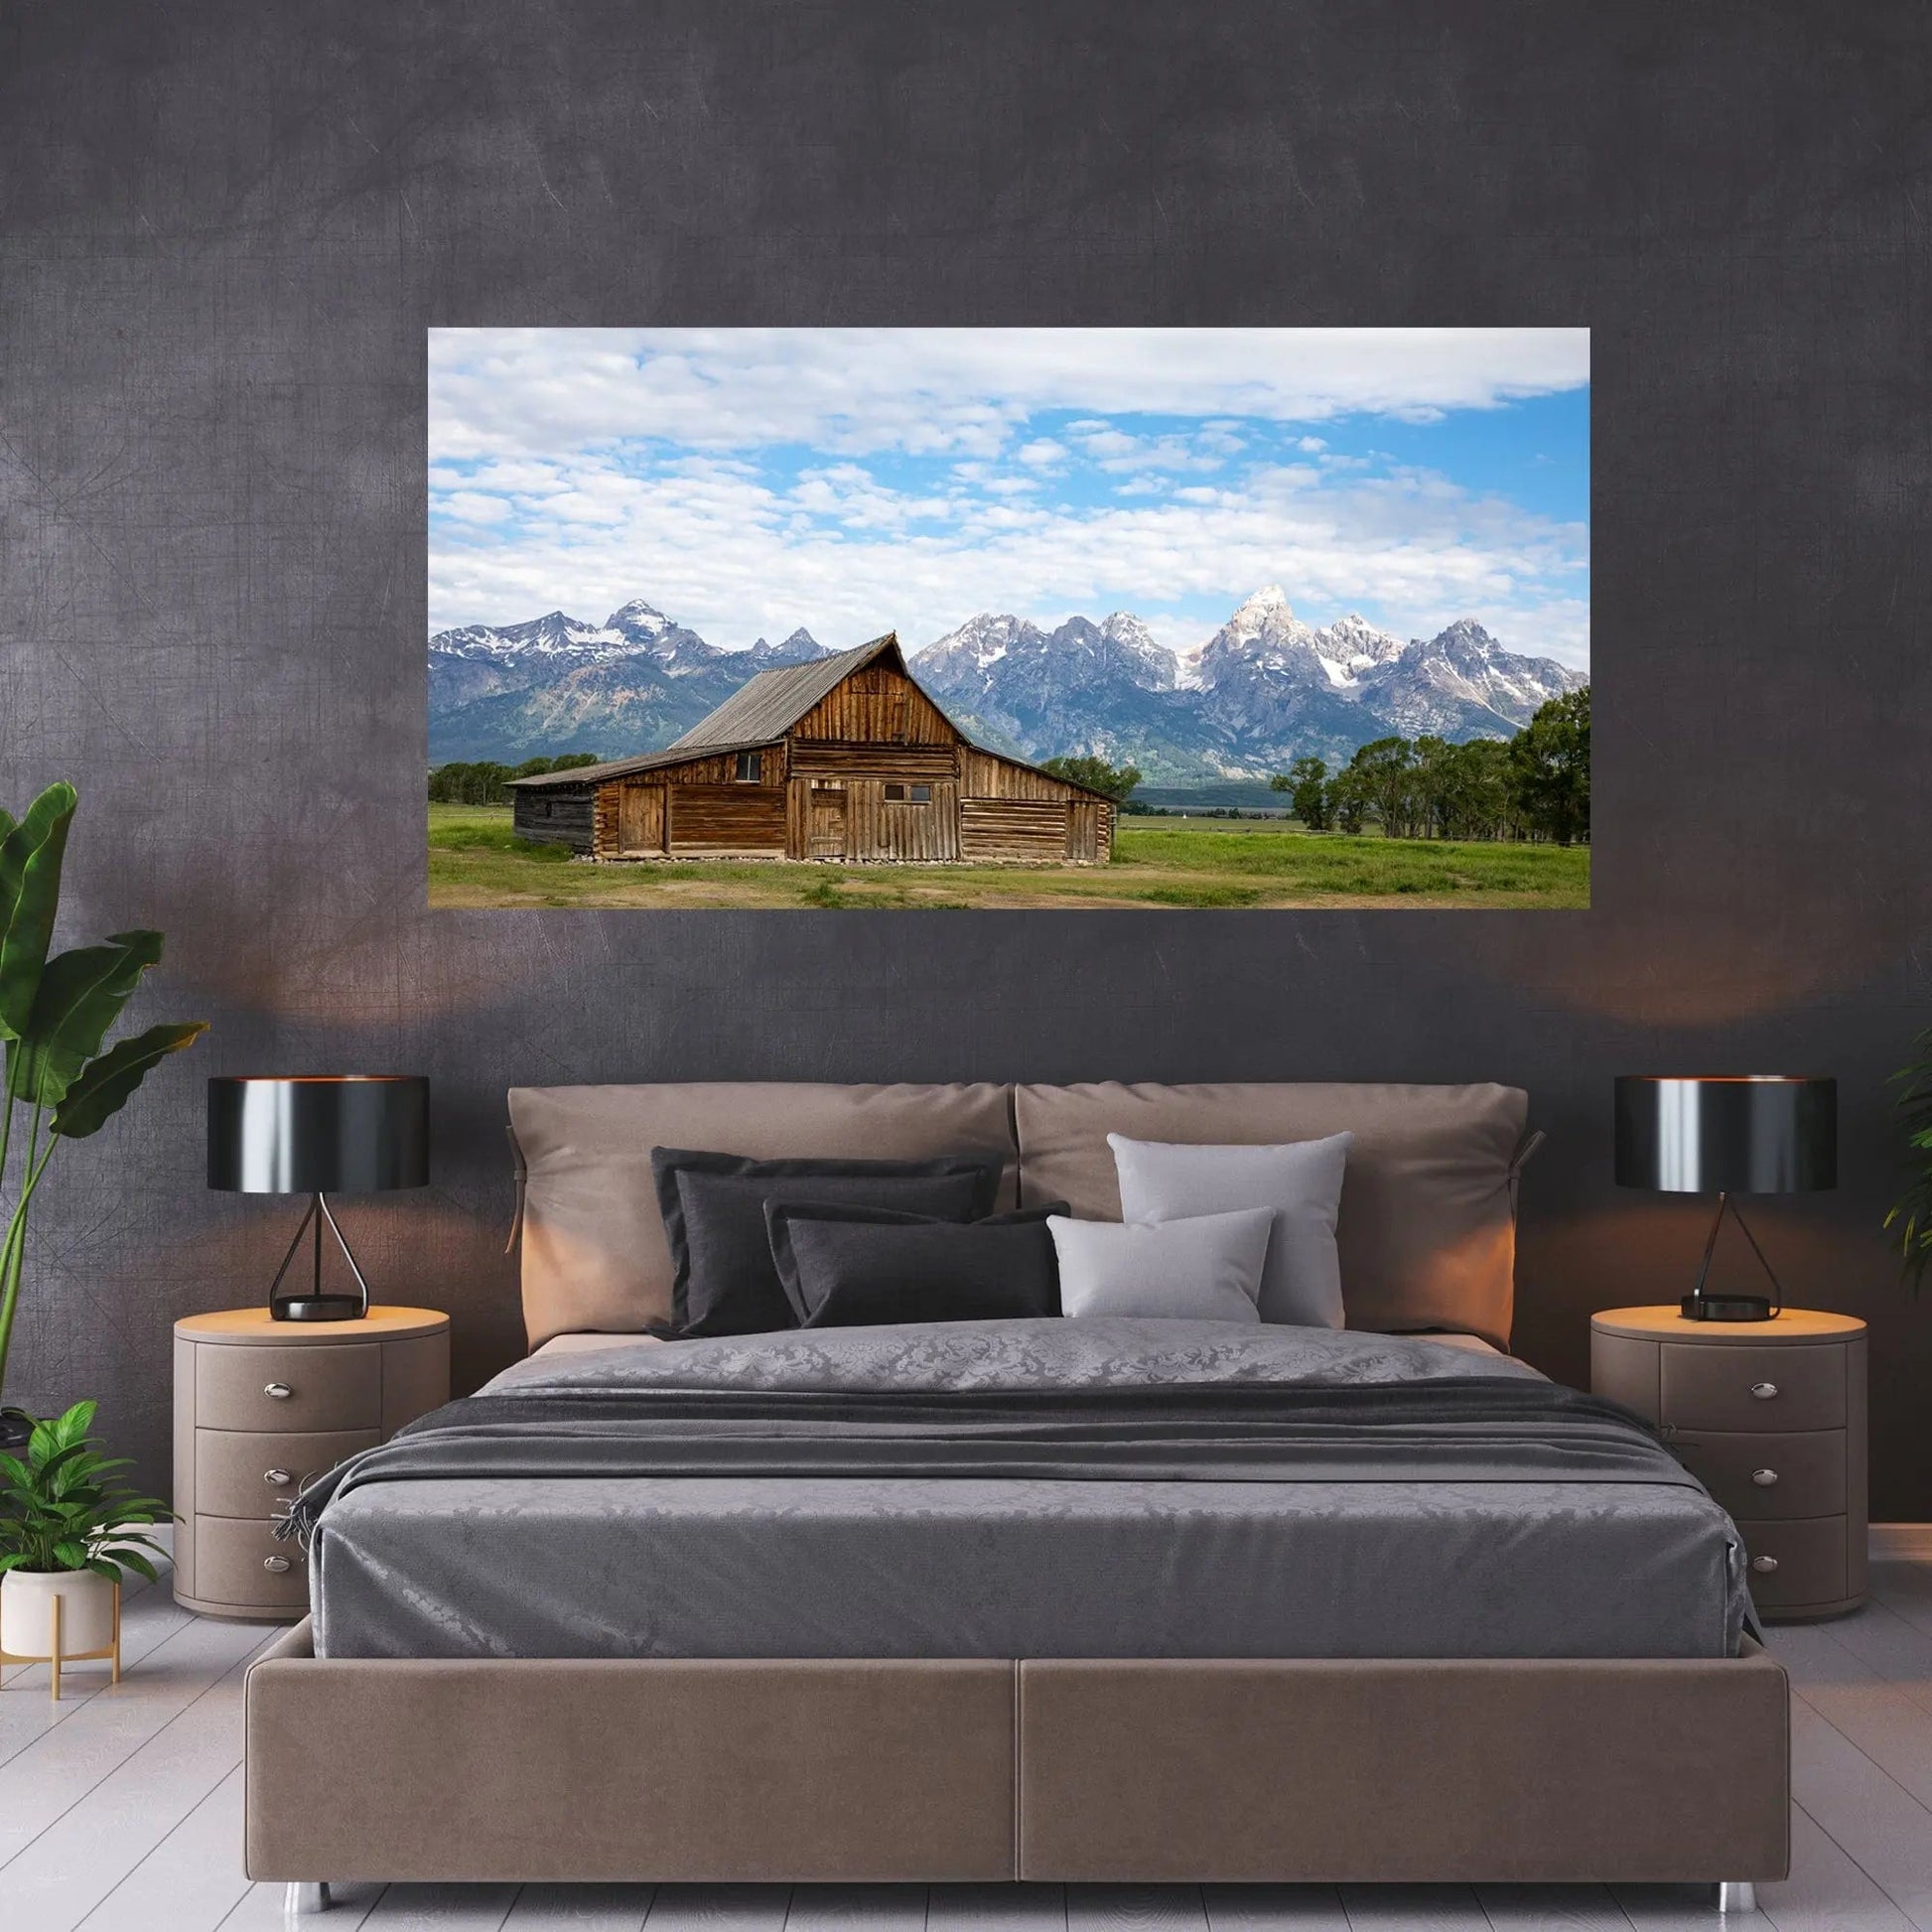 Mormon row barn on display in bedroom. Moulton barn hi-res photography fine art